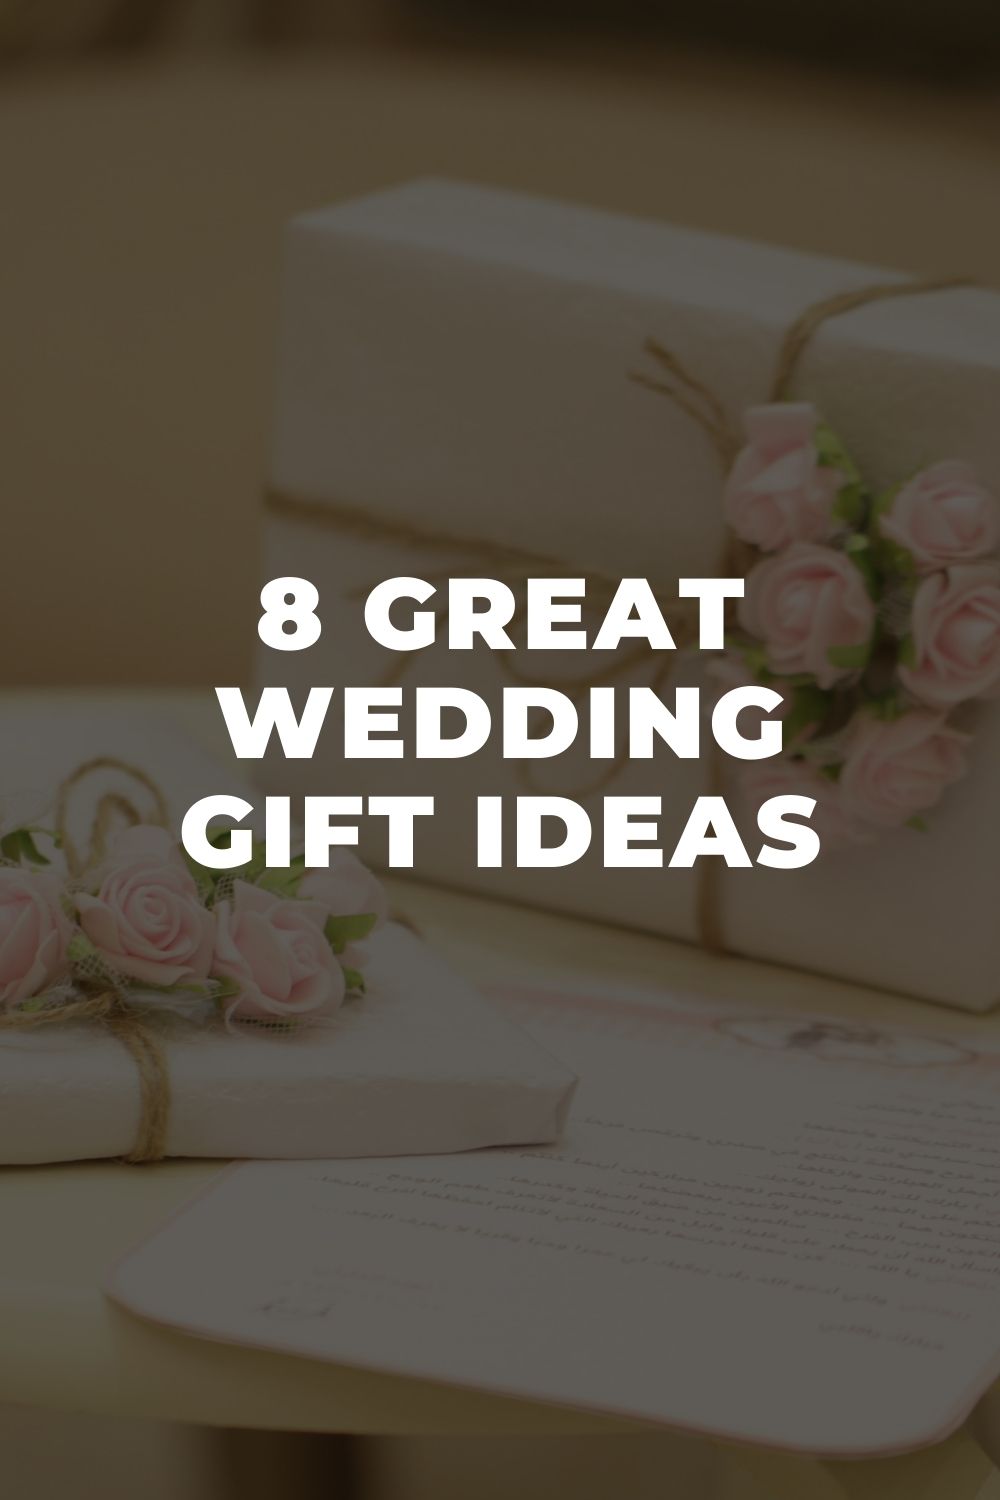 8 Great Wedding Gift Ideas